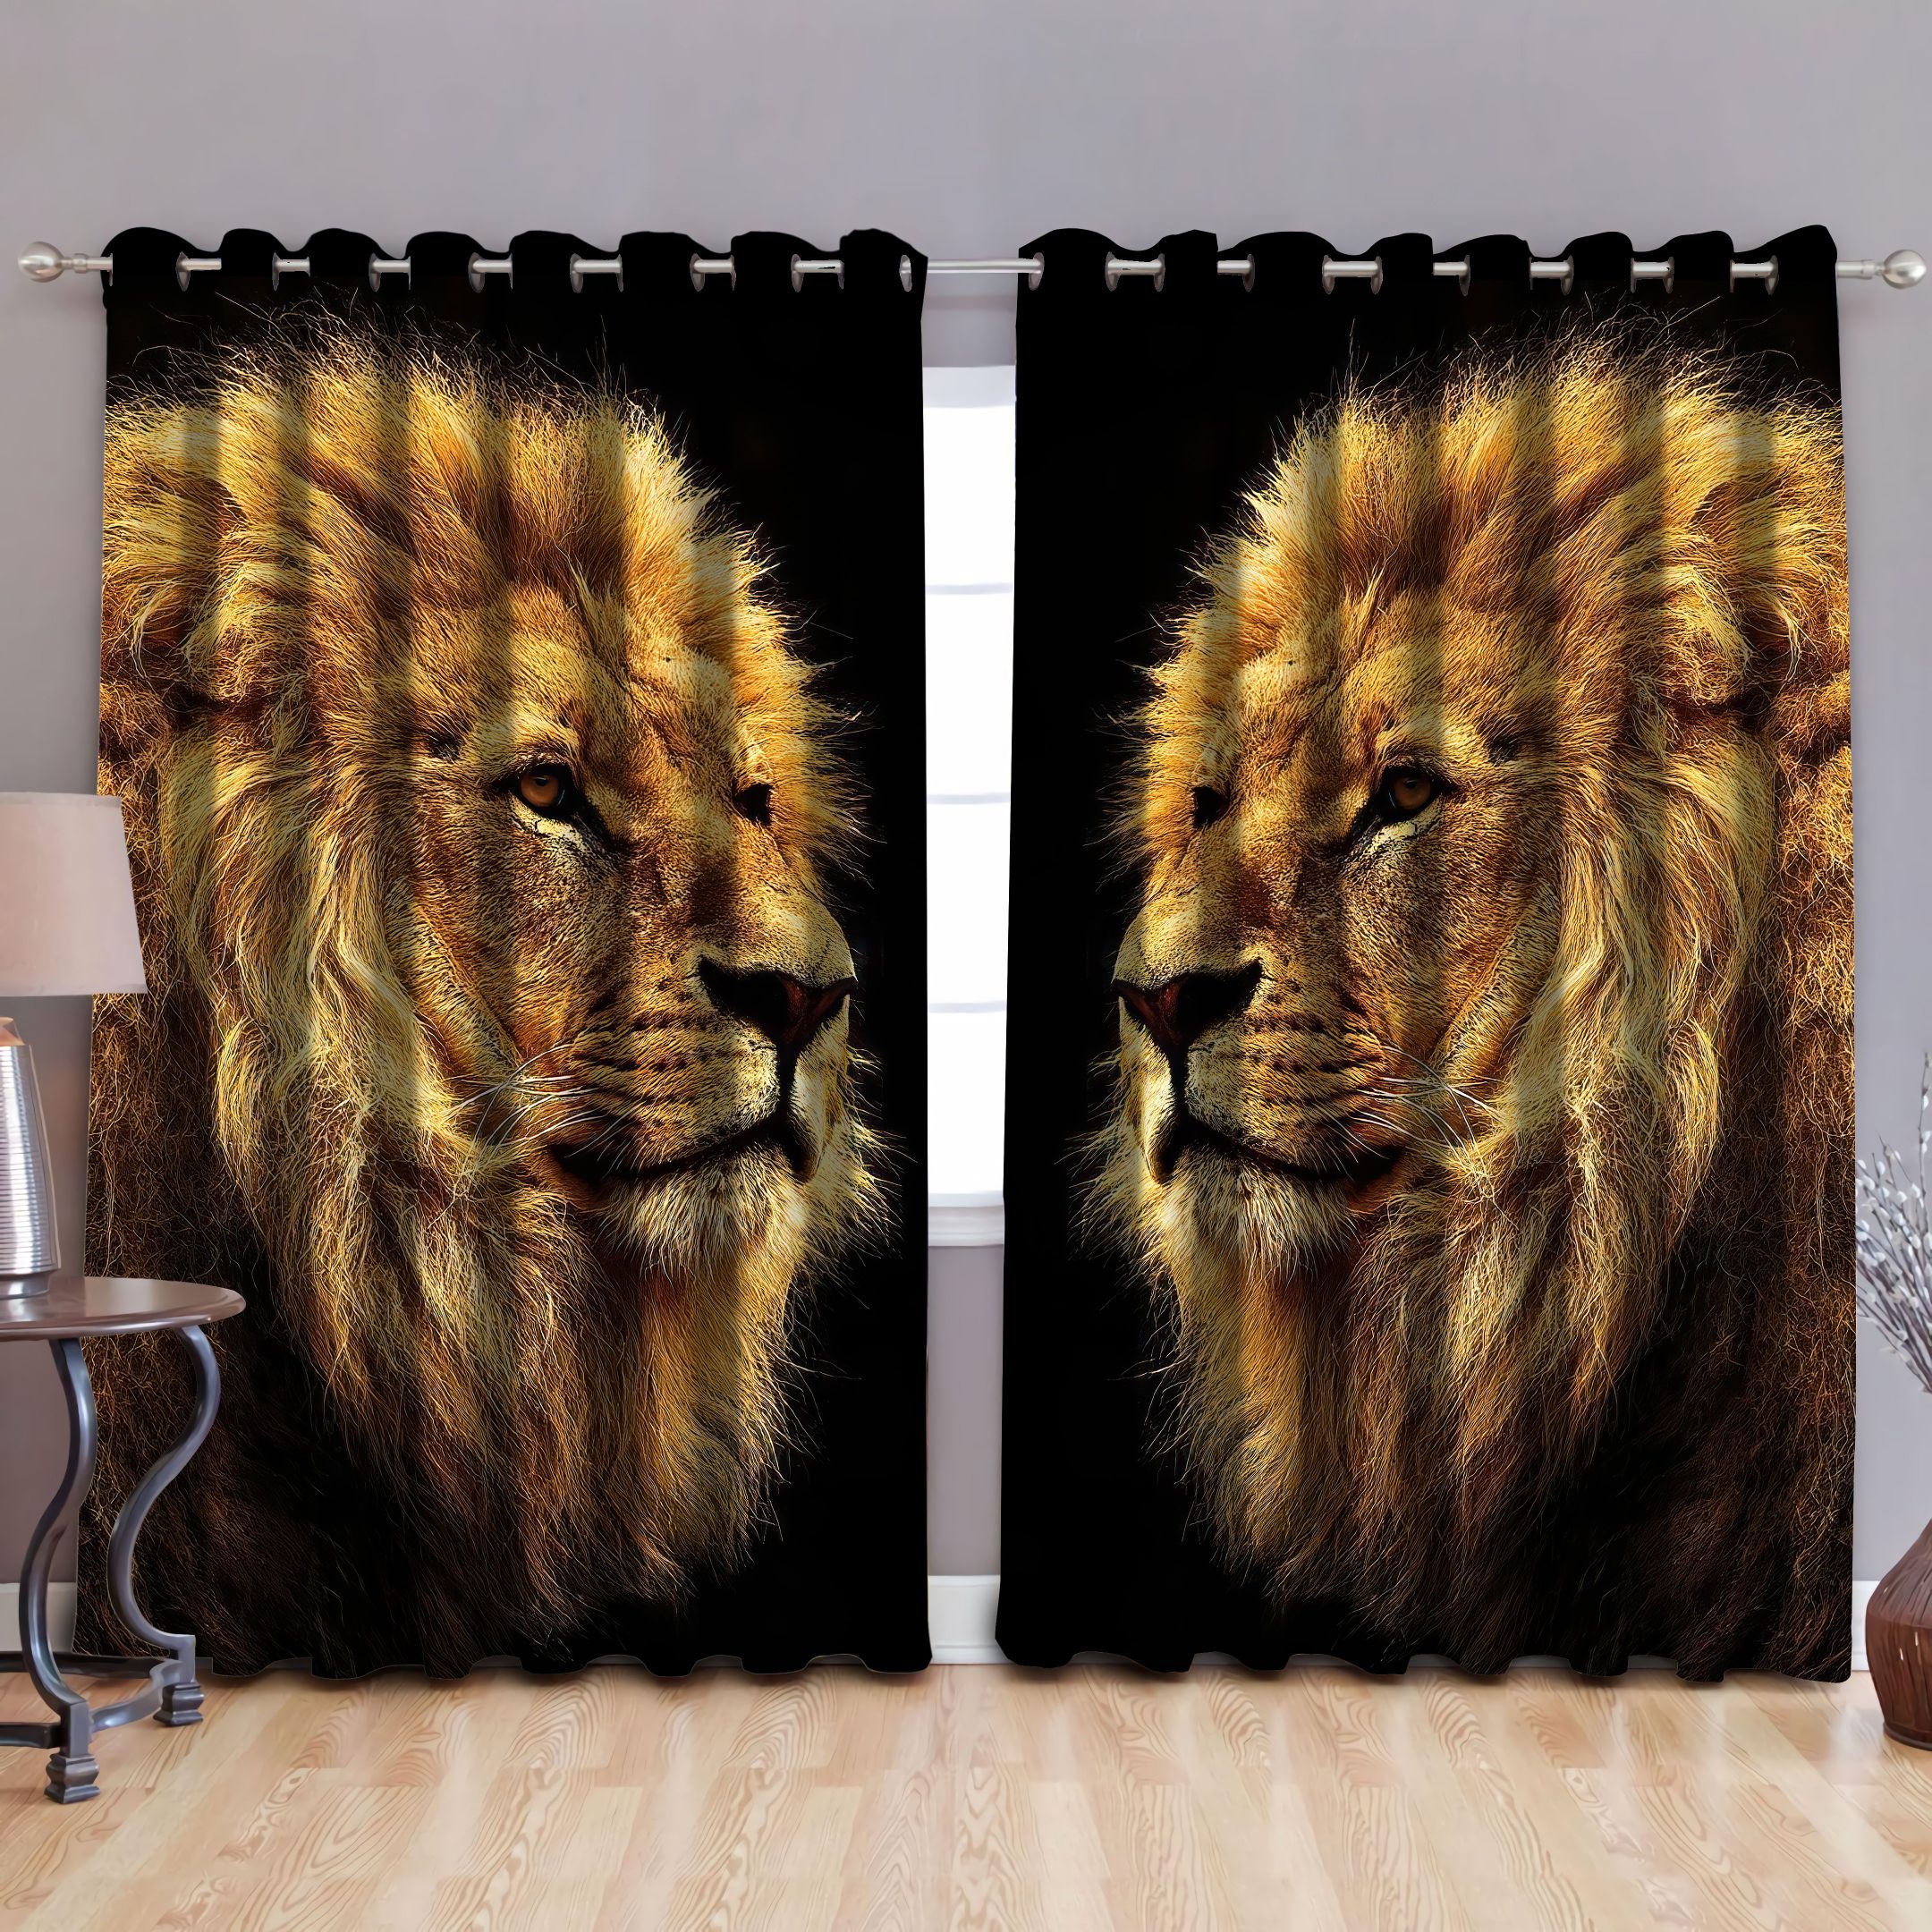 The Best Lion Window Curtains PAN